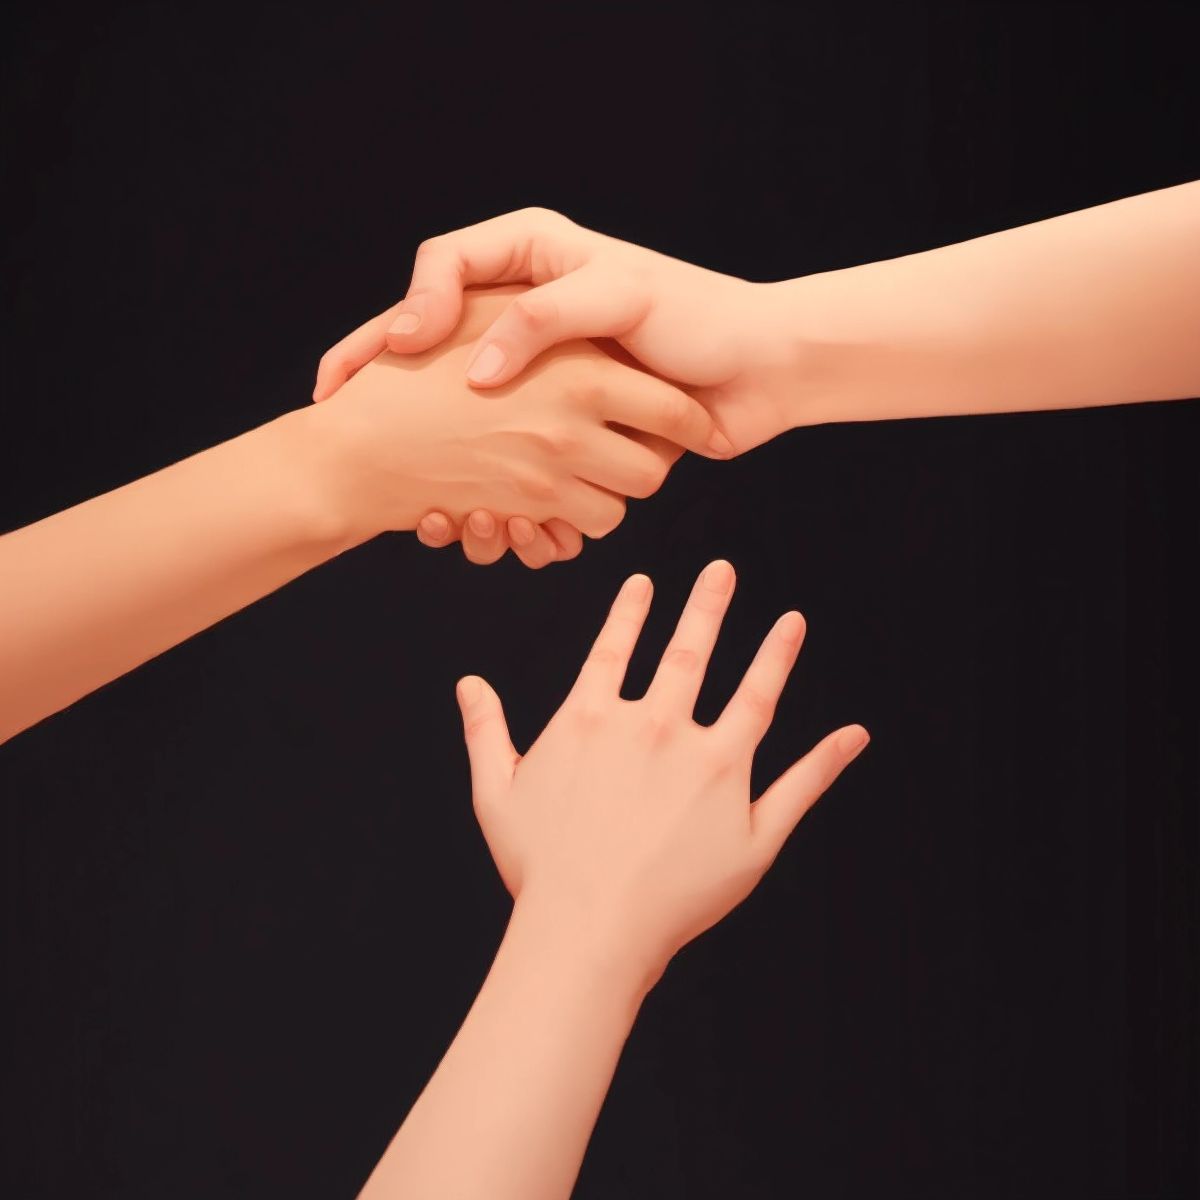 Two hands shaking, symbolizing forgiveness